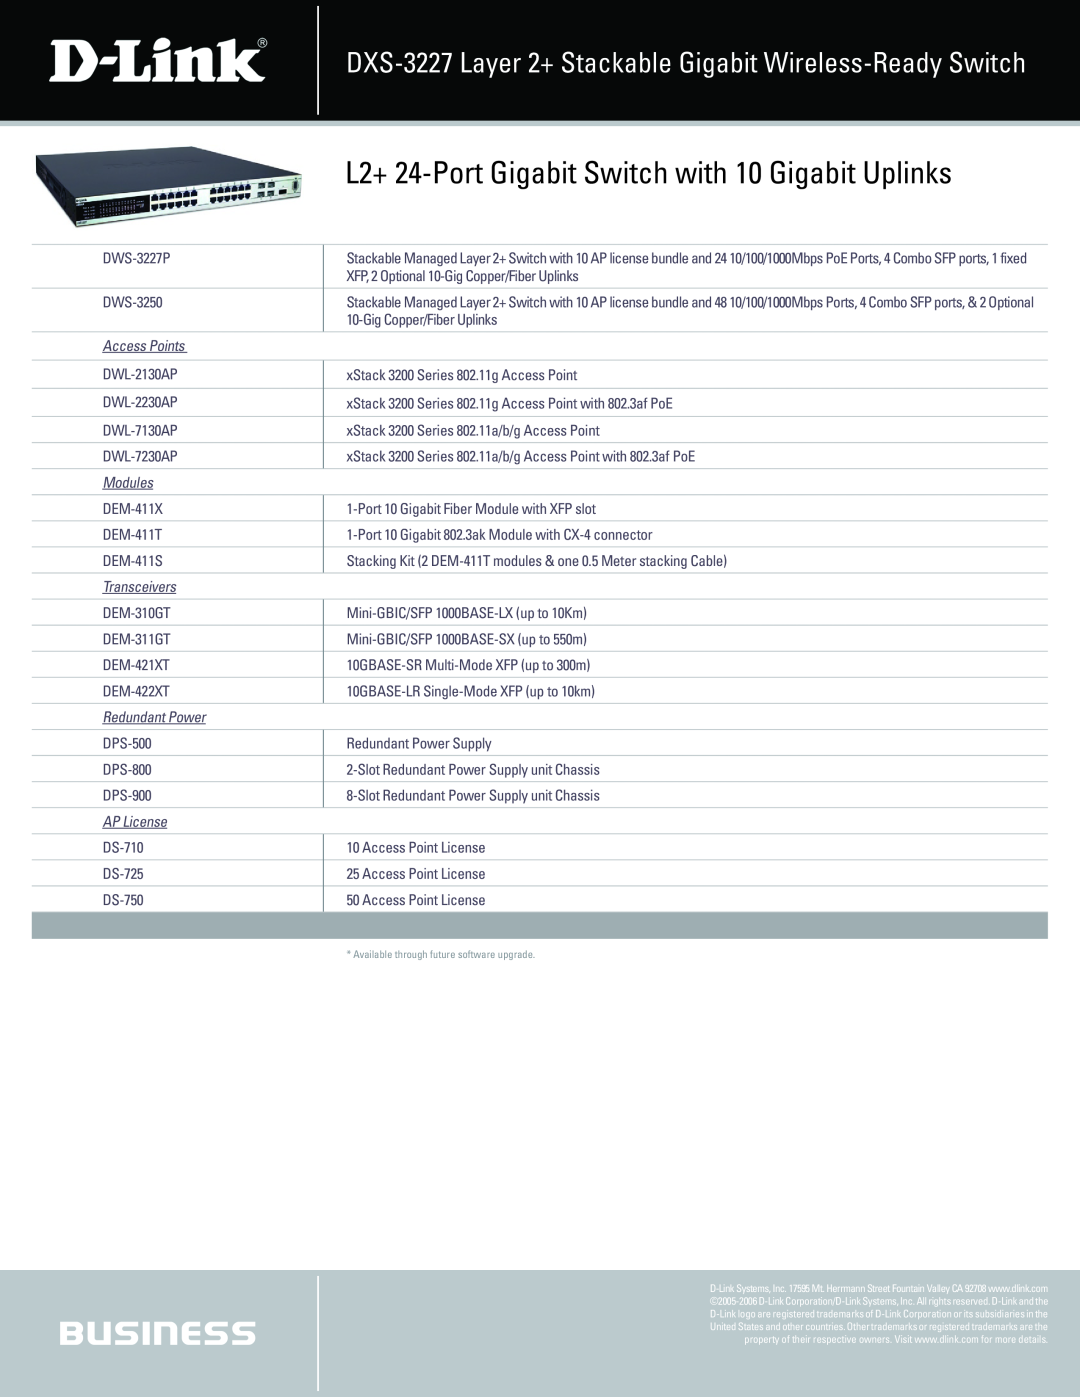 D-Link DXS-3227 L2+ 24-Port Gigabit Switch with 10 Gigabit Uplinks, Access Points, Modules, Transceivers, Redundant Power 